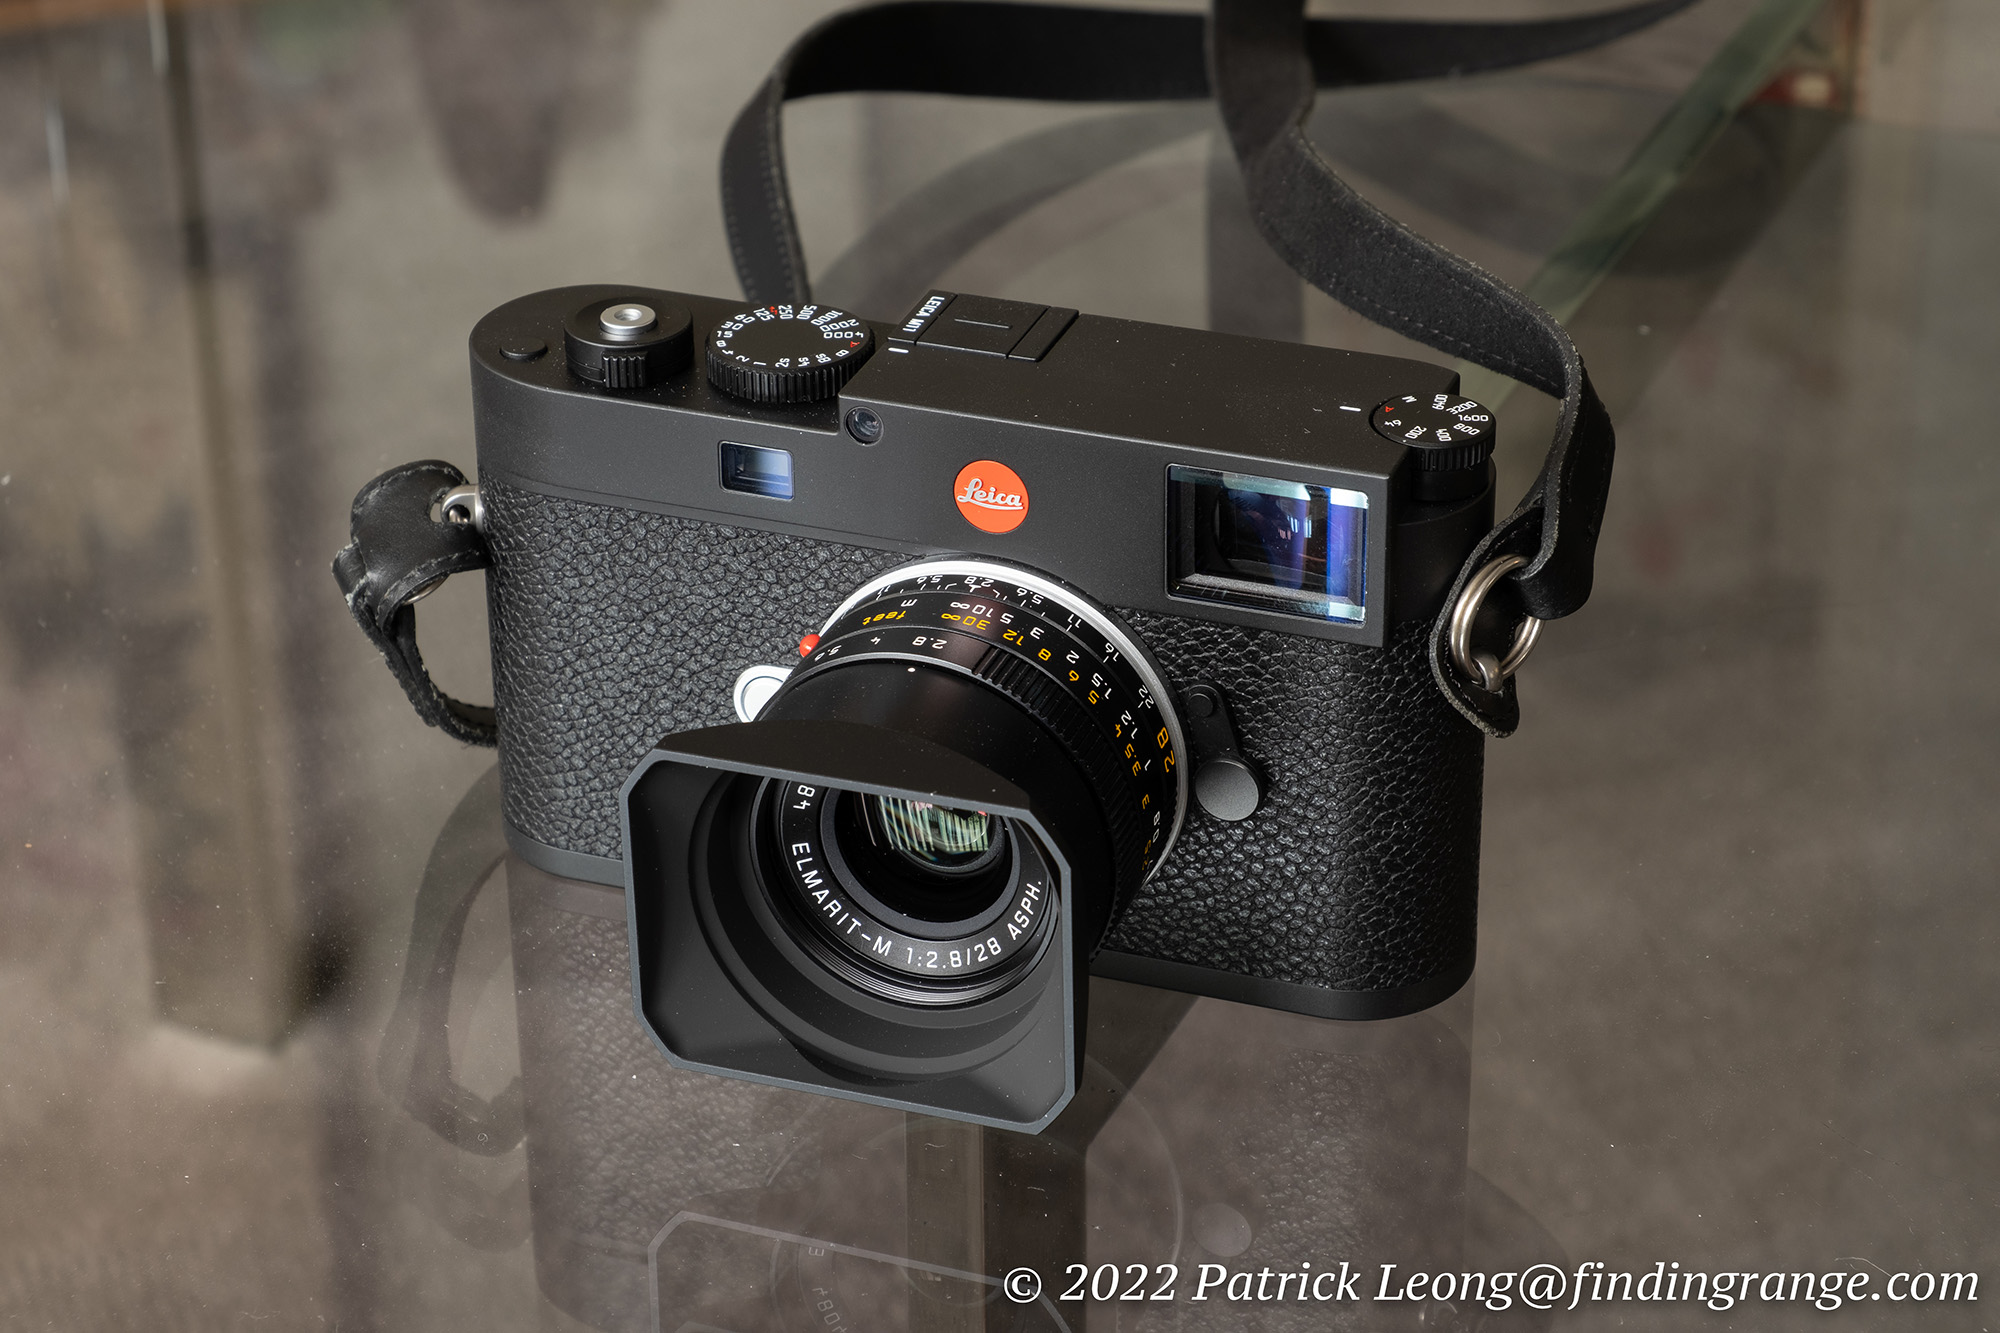 Leica Elmarit-M 28mm f2.8 ASPH Lens Review - Finding Range